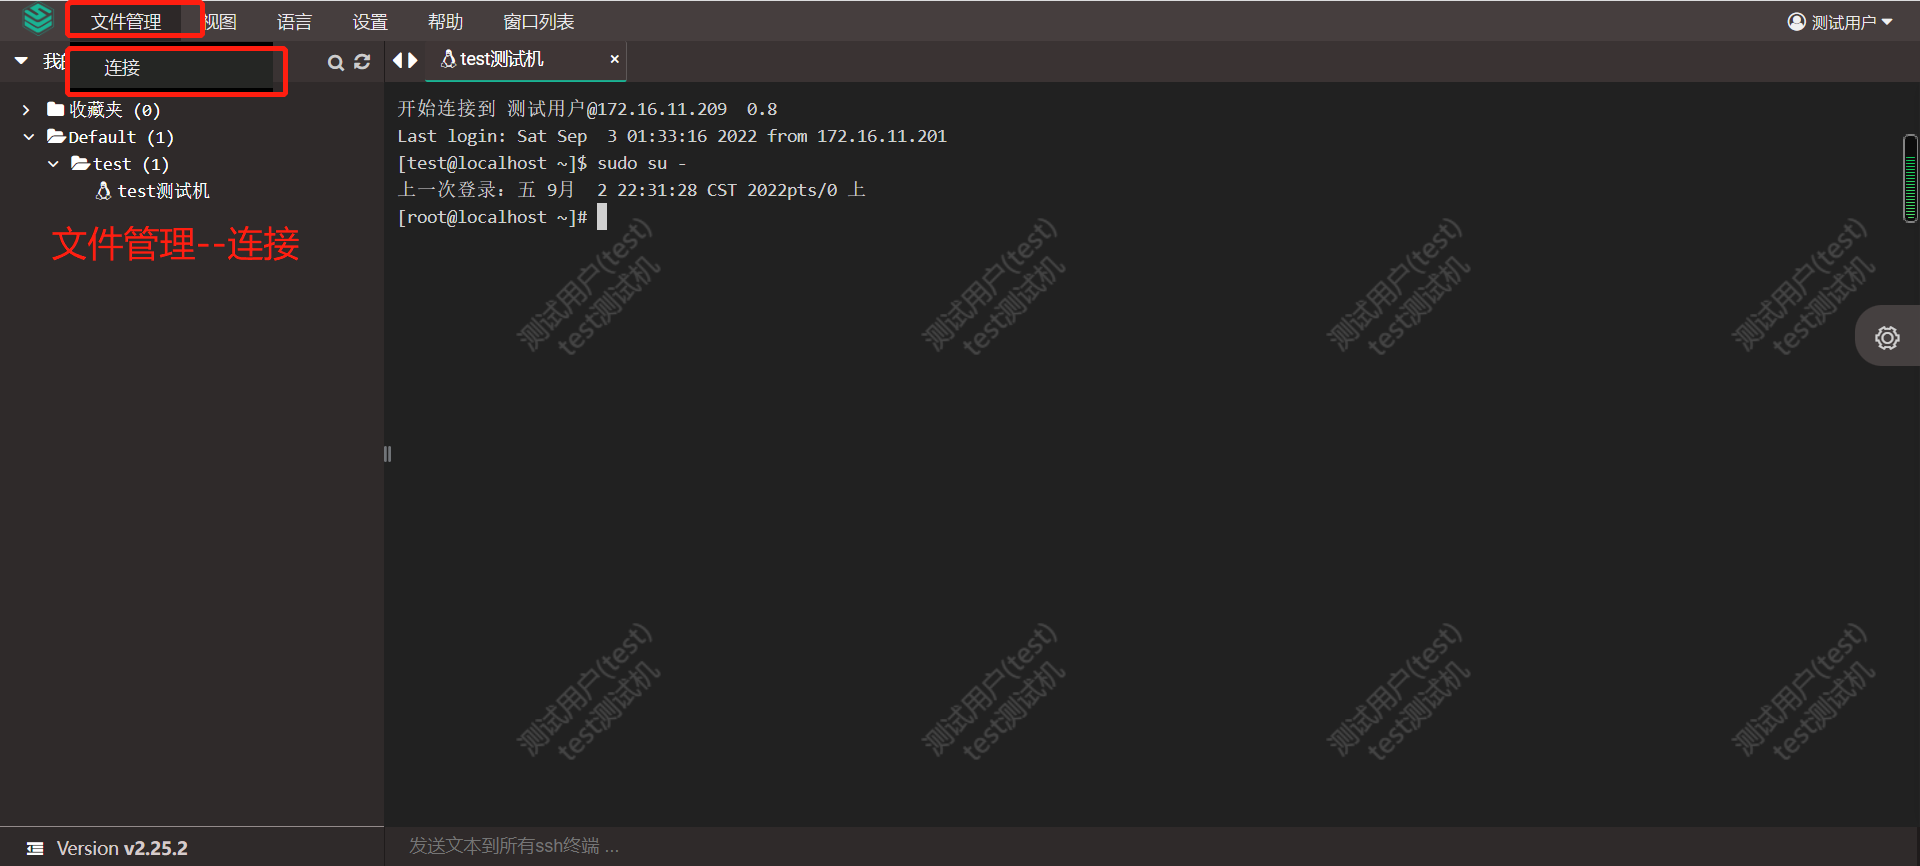 【Linux】之Jumpserver堡垒机添加linux主机资产,在这里插入图片描述,第51张